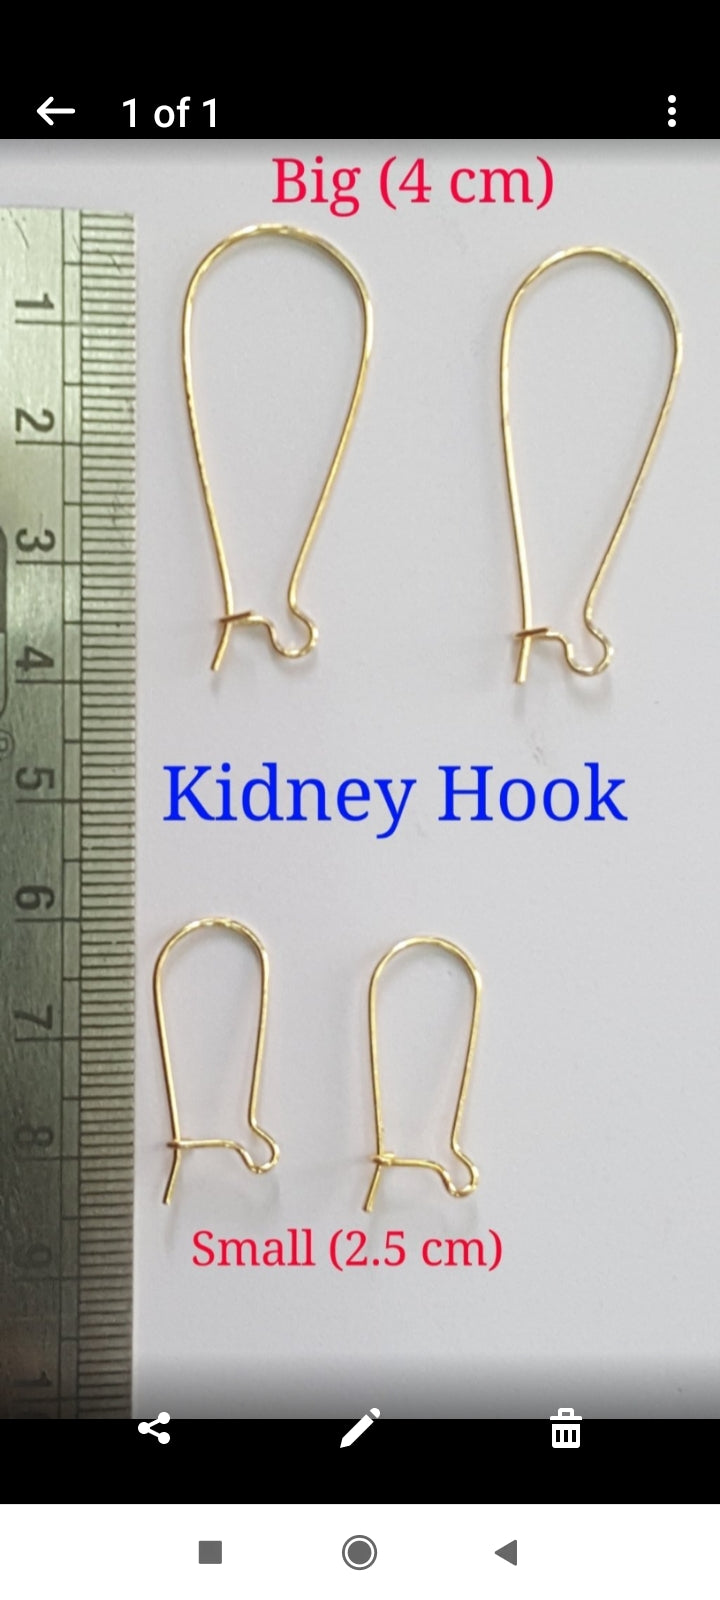 Kidney Hook Small 3.5 cm -10 Pairs